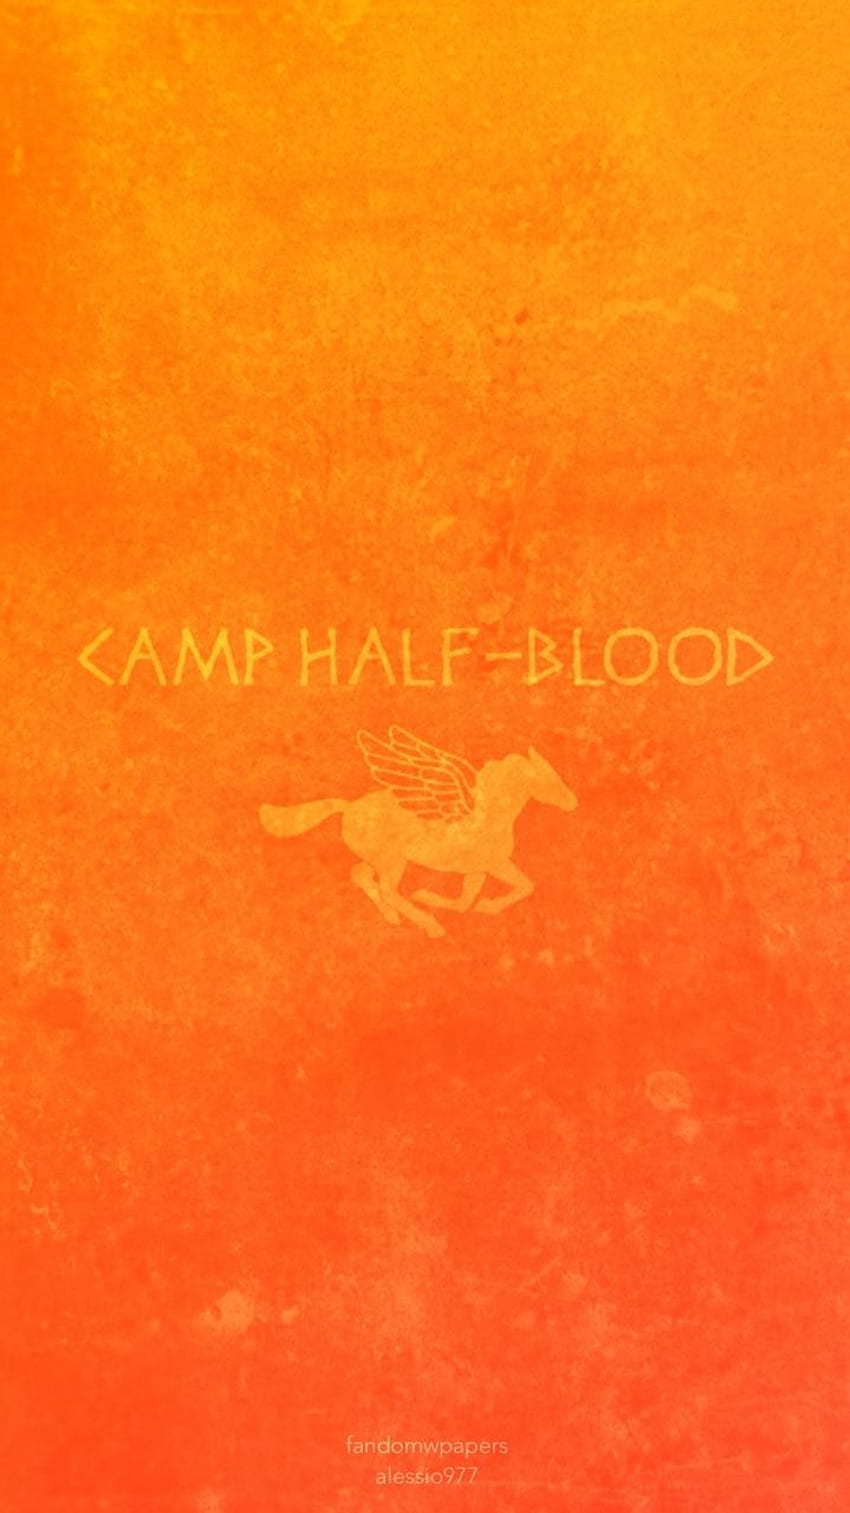 Camp half-blood exploration